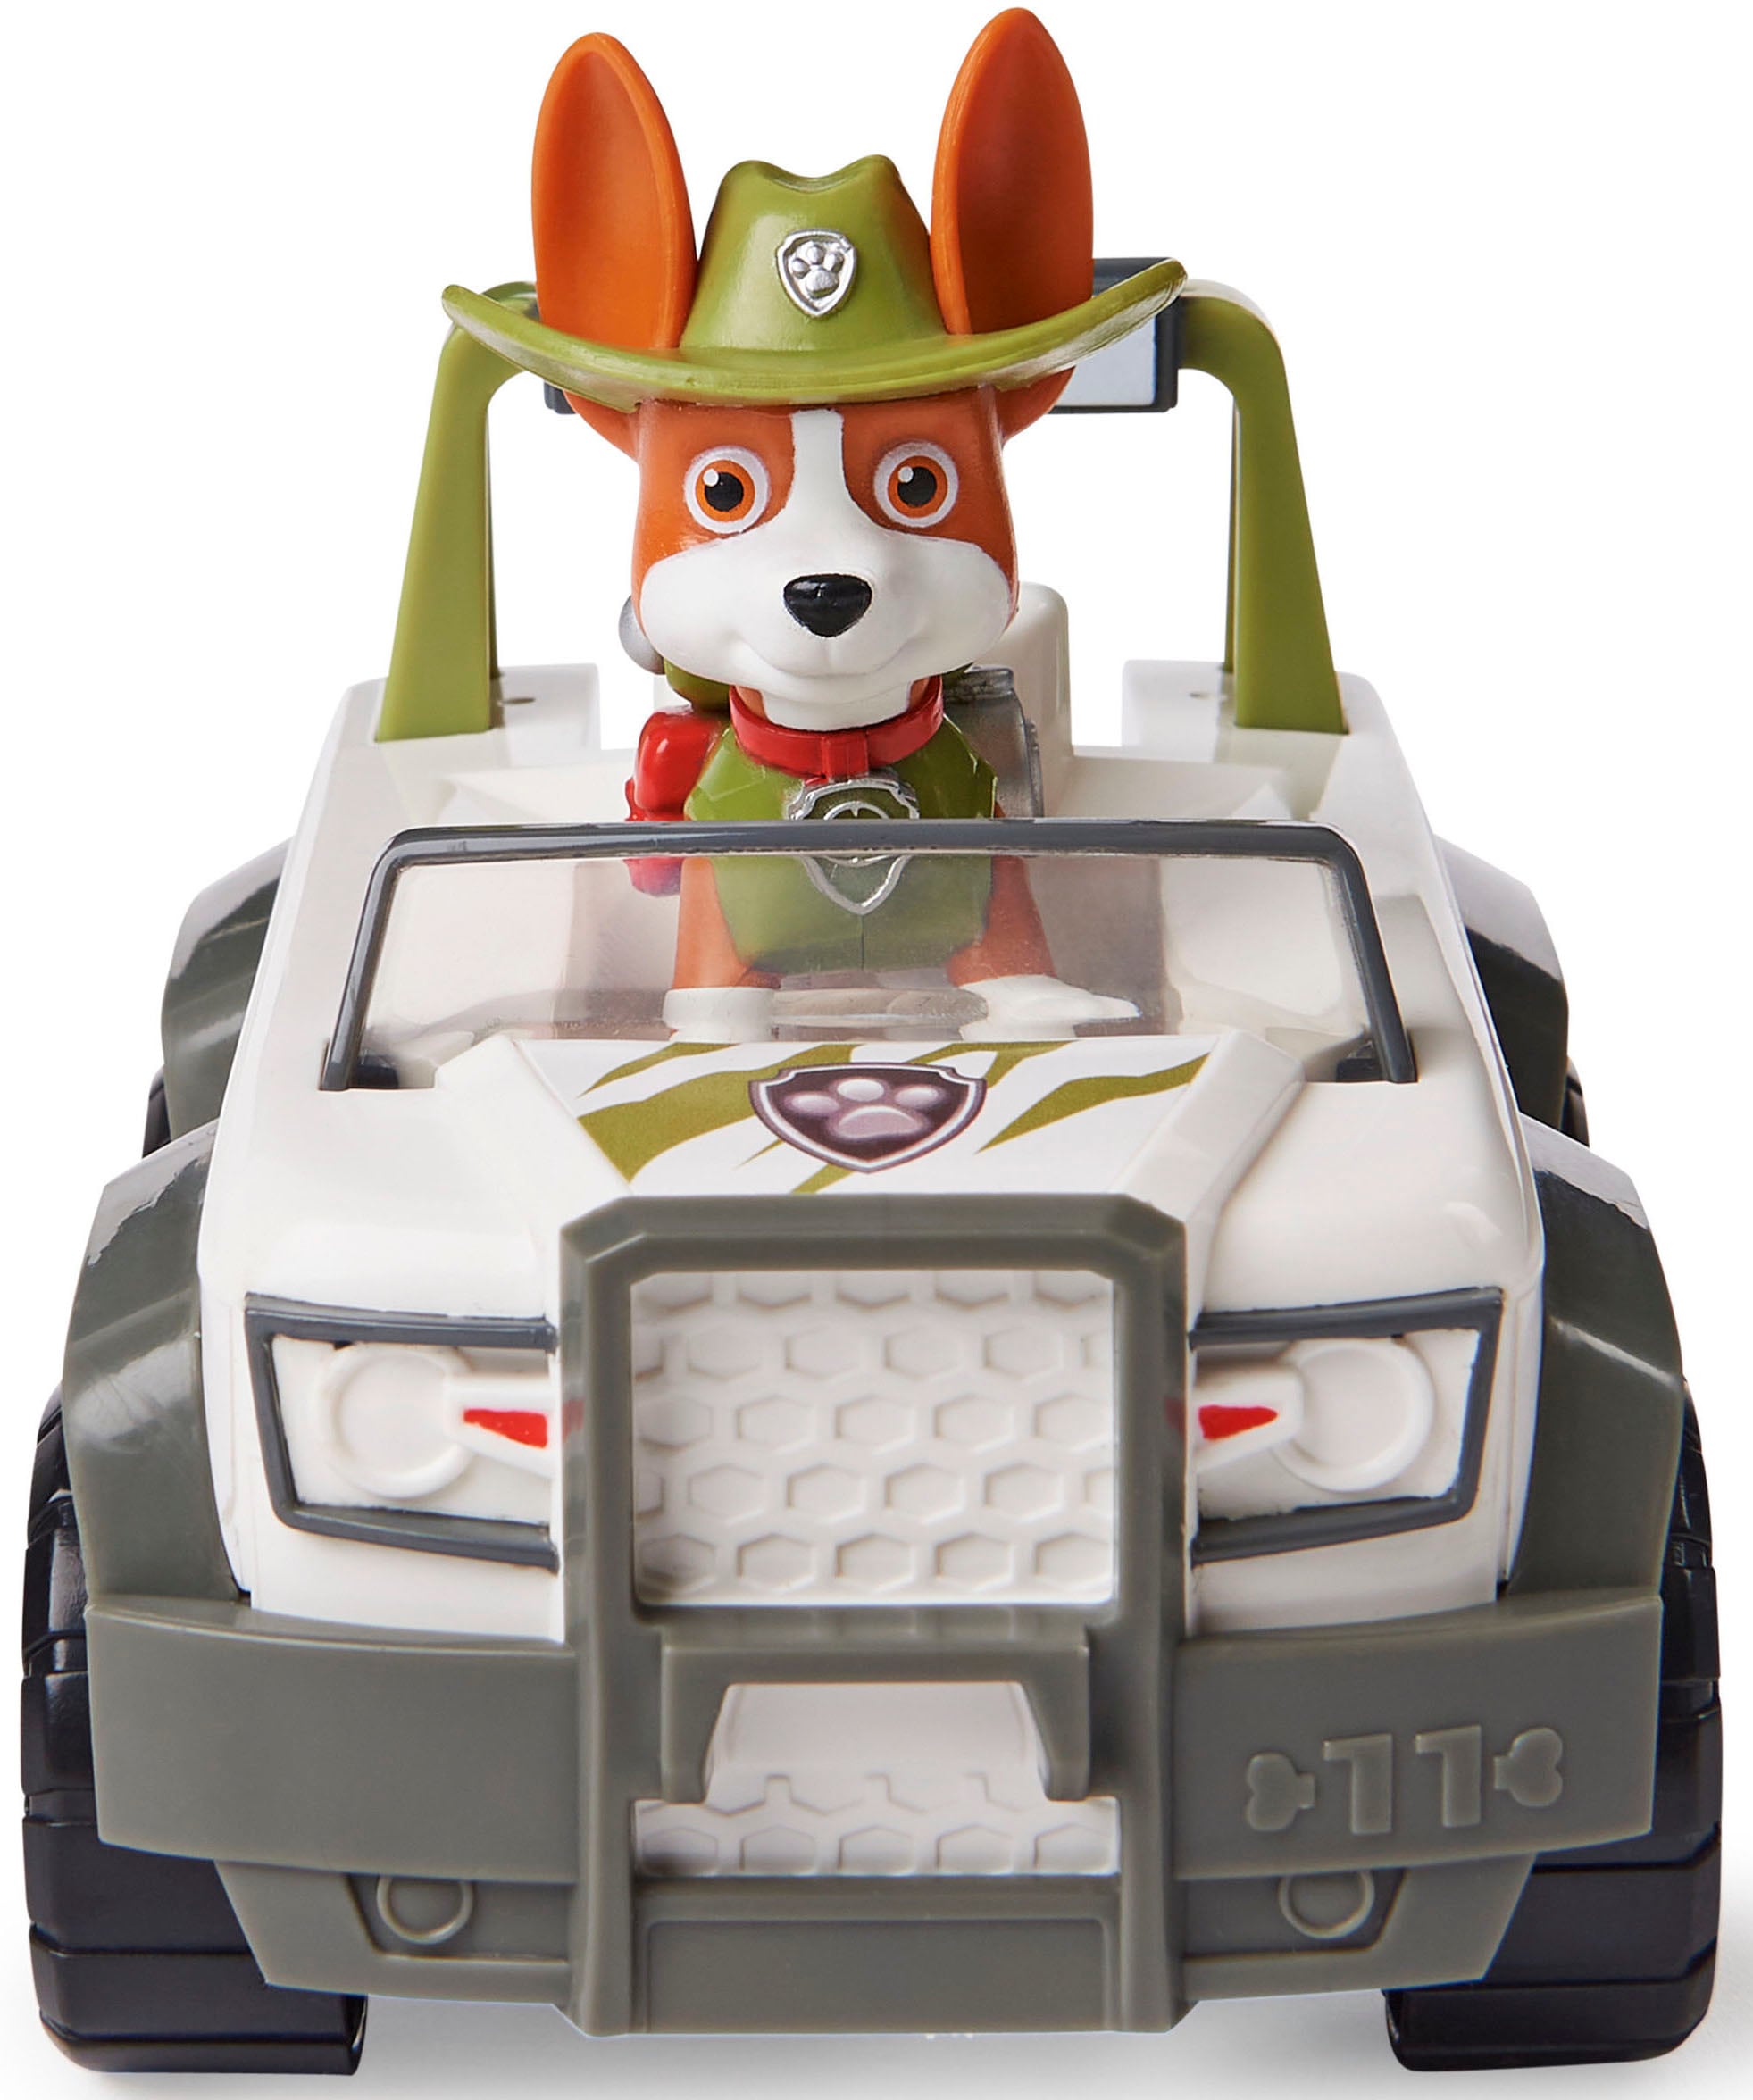 Spin Master Spielzeug-Auto PAW Patrol, Quad-Fahrzeug mit Ryder-Figur